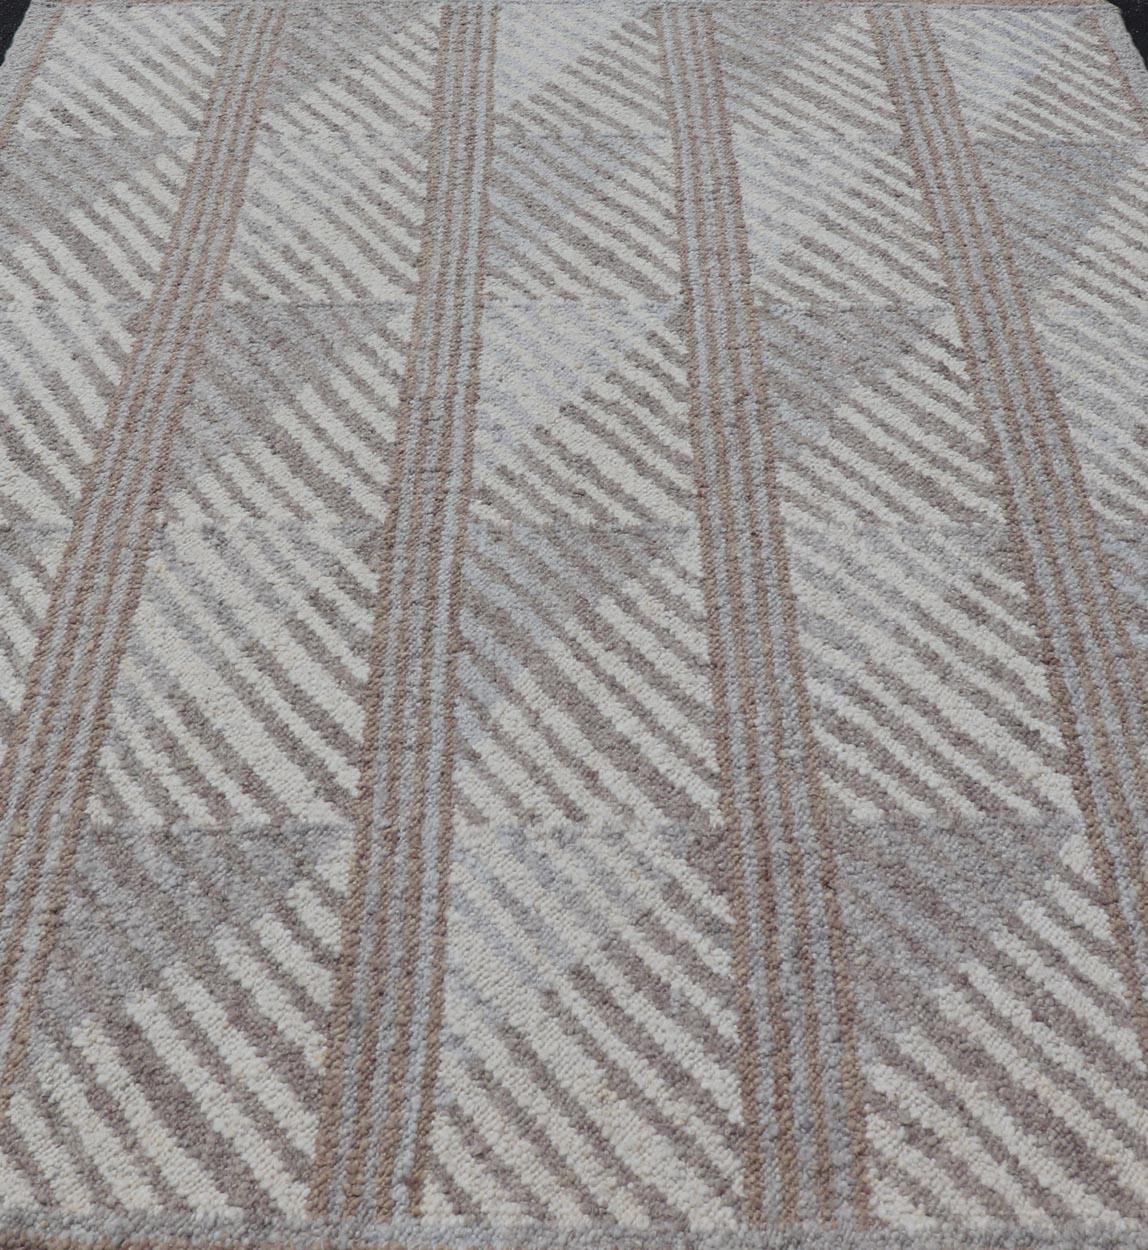 Modern Scandinavian Flat-Weave Rug With Modern Design in Gray, Ivory, Tan Tones. Keivan Woven Arts / rug RJK-26627-SHB-014-NU, country of origin / type: India / Scandinavian flat-weave.
Measures: 7'10 x 10'7 
This Scandinavian flat-weave style is